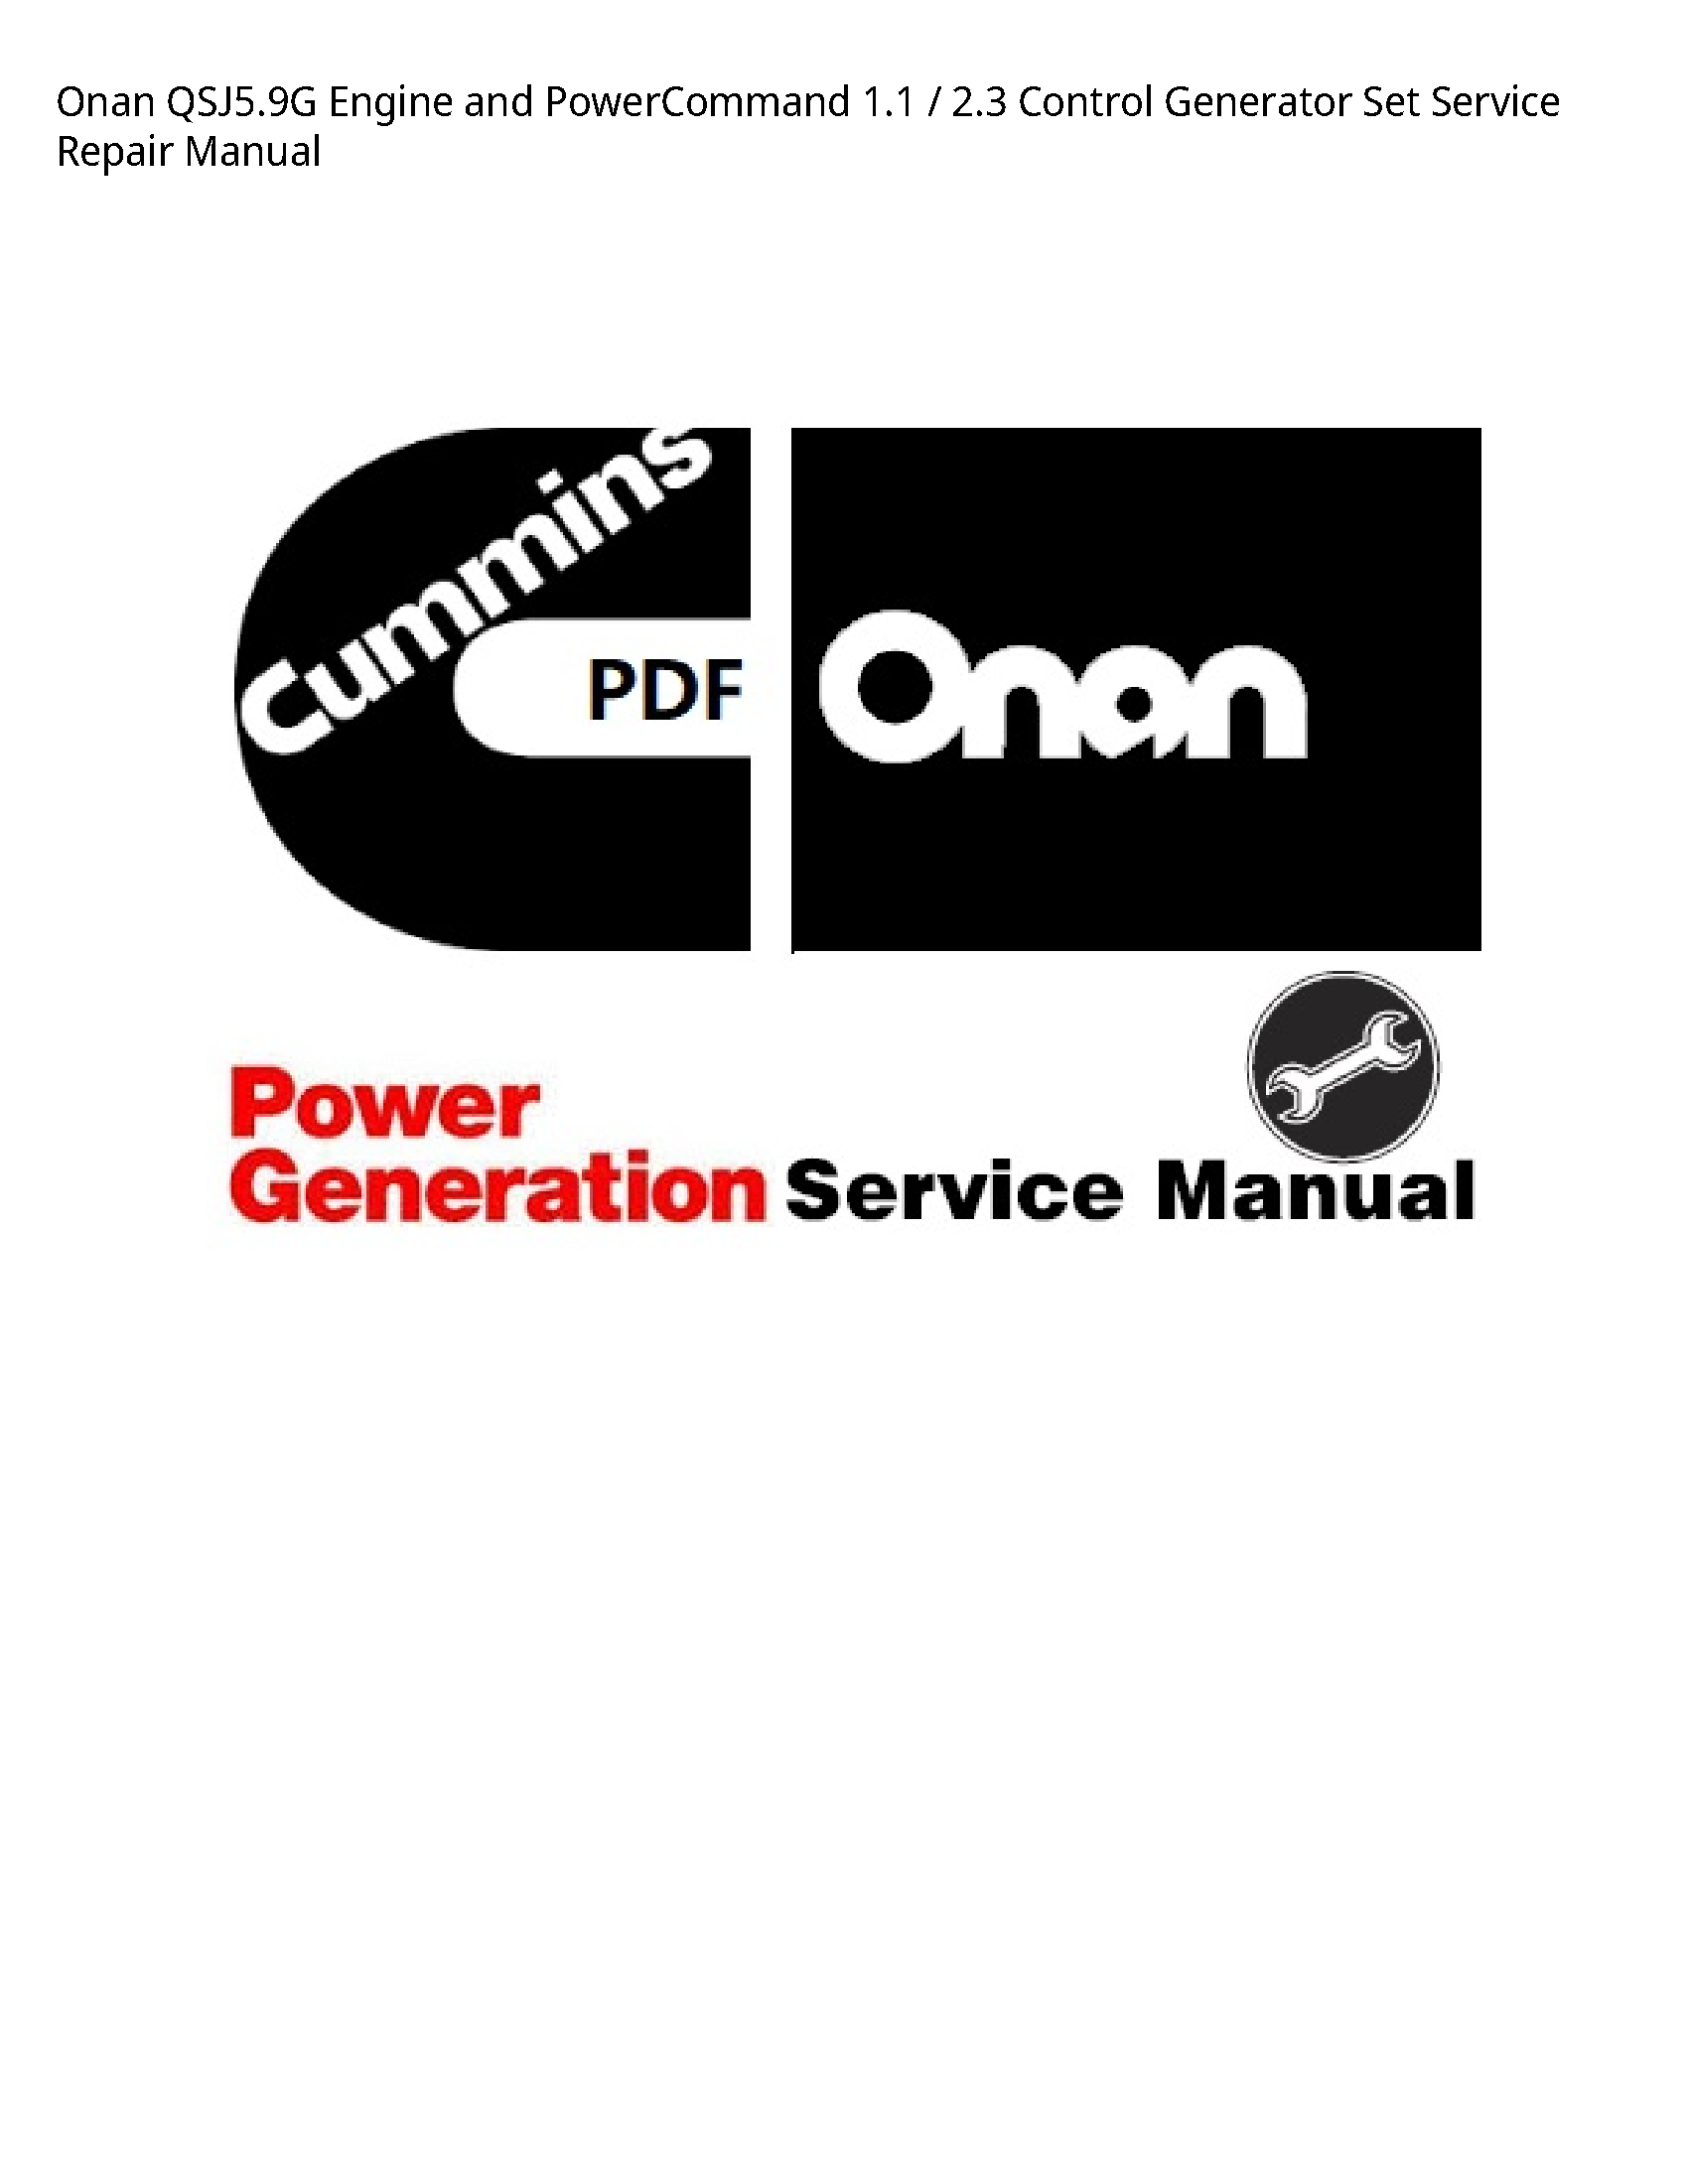 Onan QSJ5.9G Engine  PowerCommand Control Generator Set manual